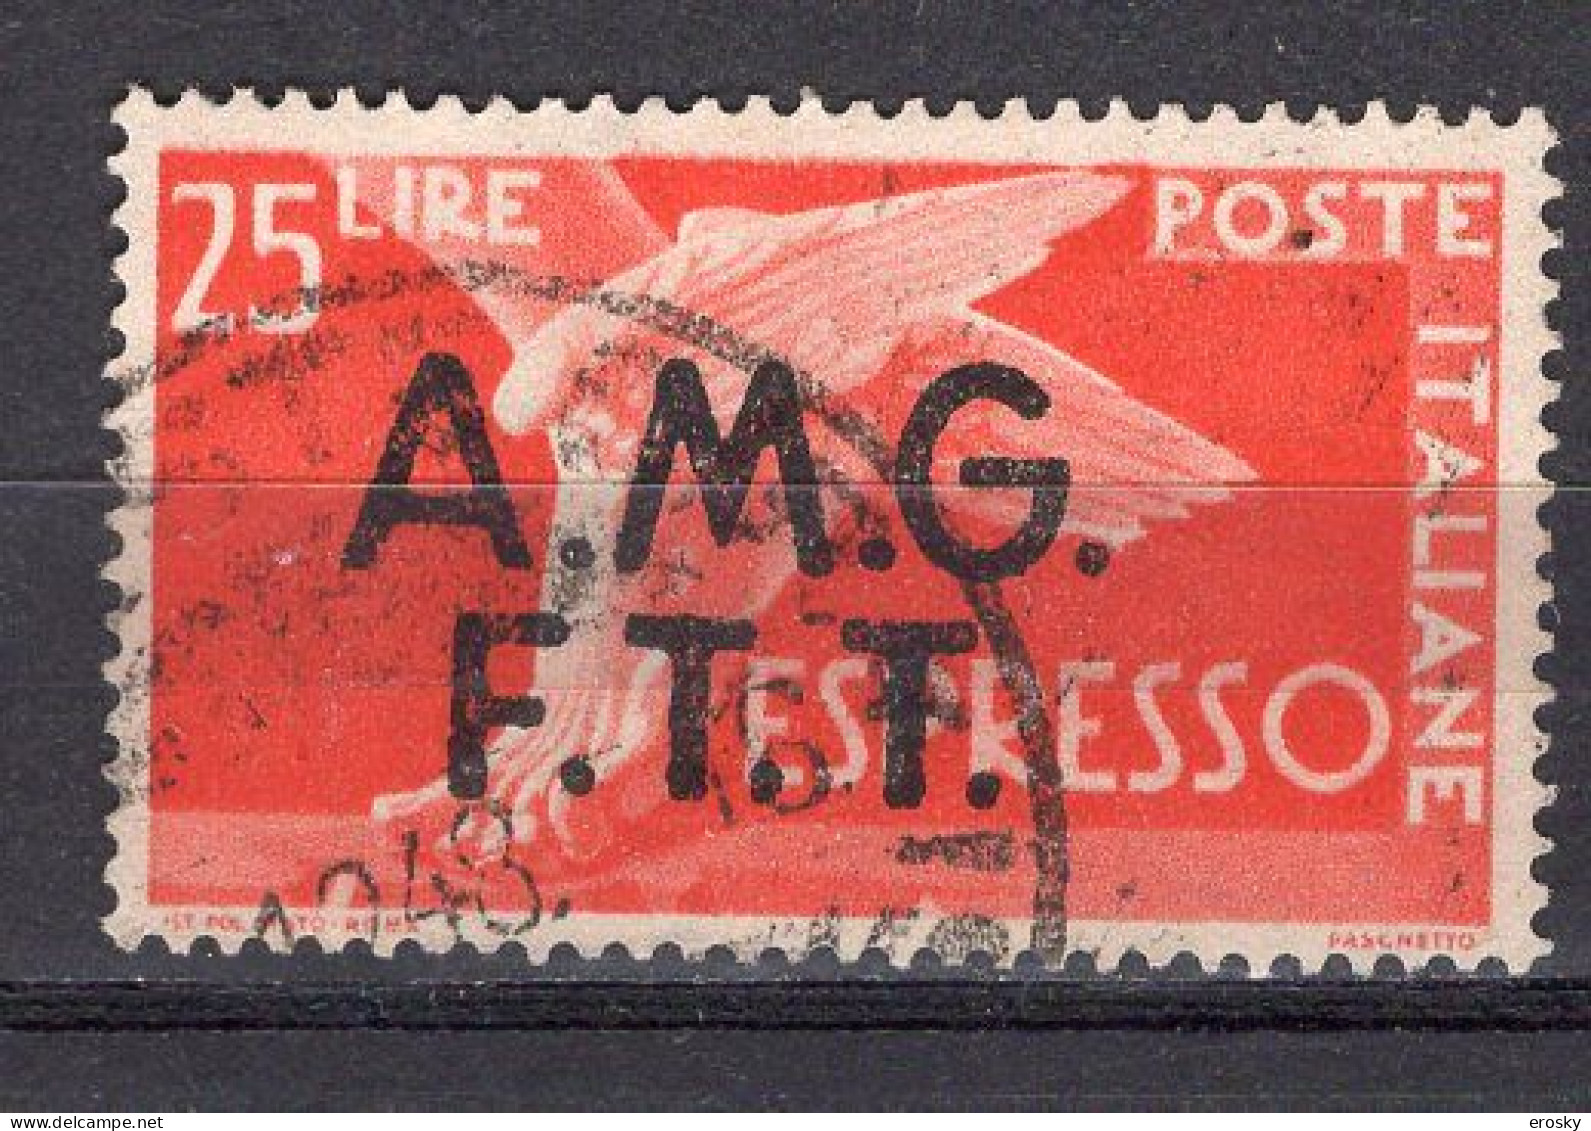 Z6883 - TRIESTE AMG-FTT ESPRESSO SASSONE N°2 - Poste Exprèsse